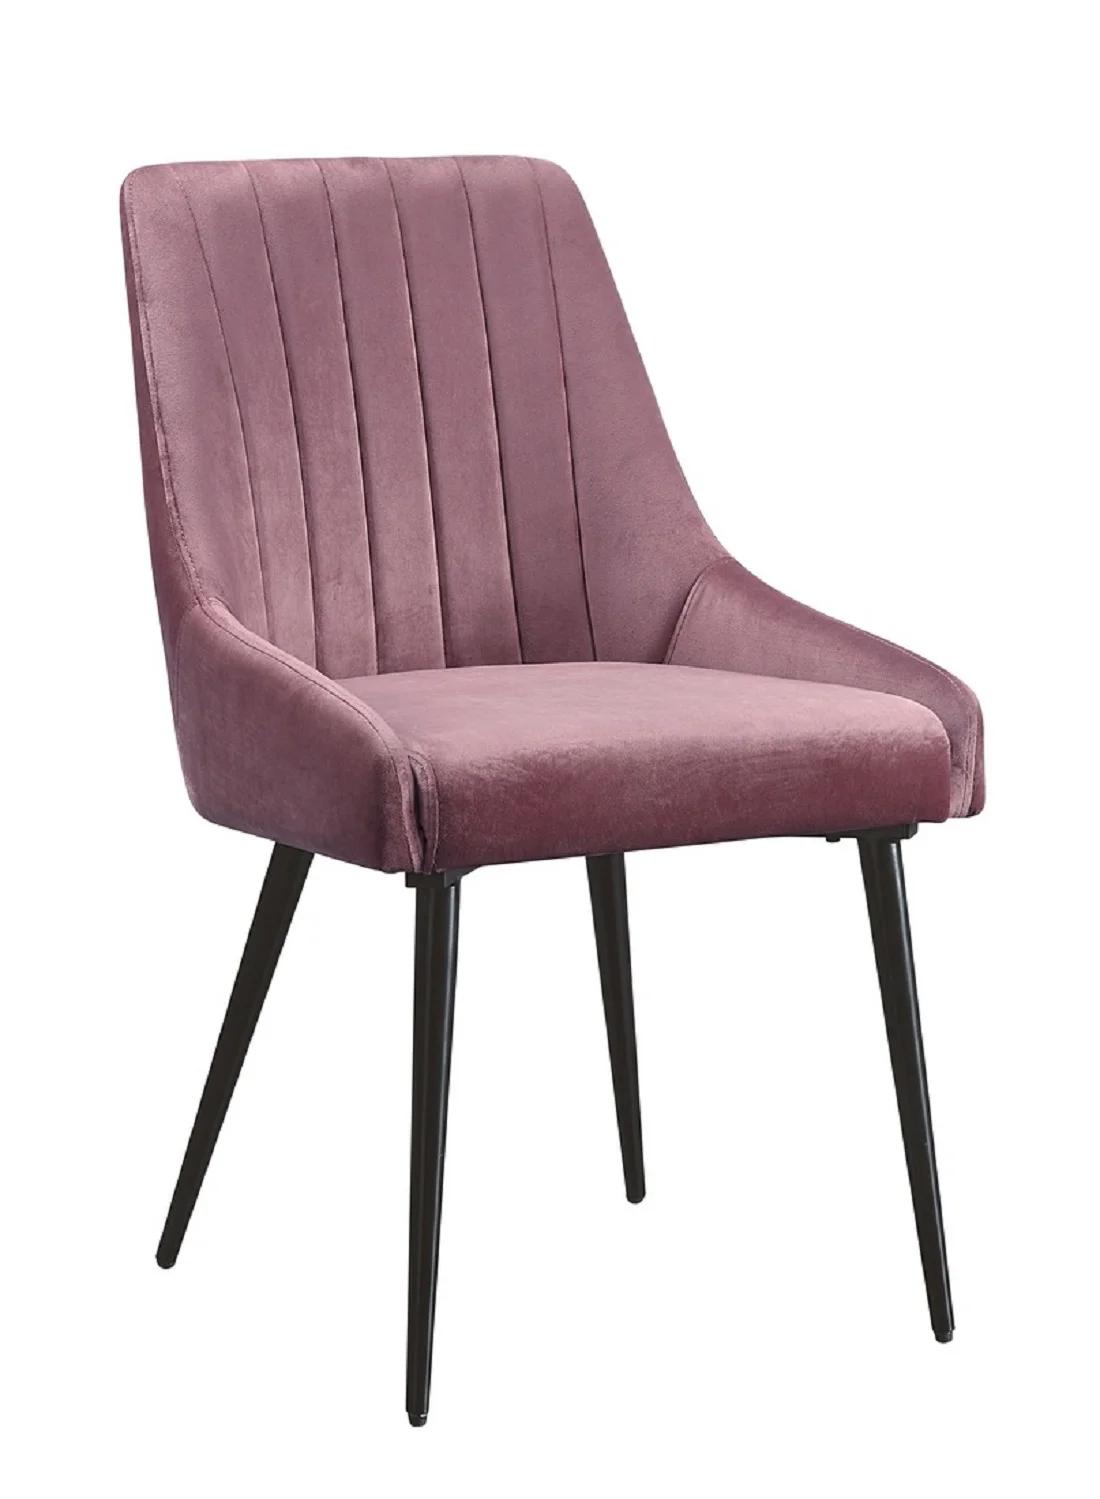 Modern Dining Chair Set Caspian 74012-2pcs in Pink Fabric